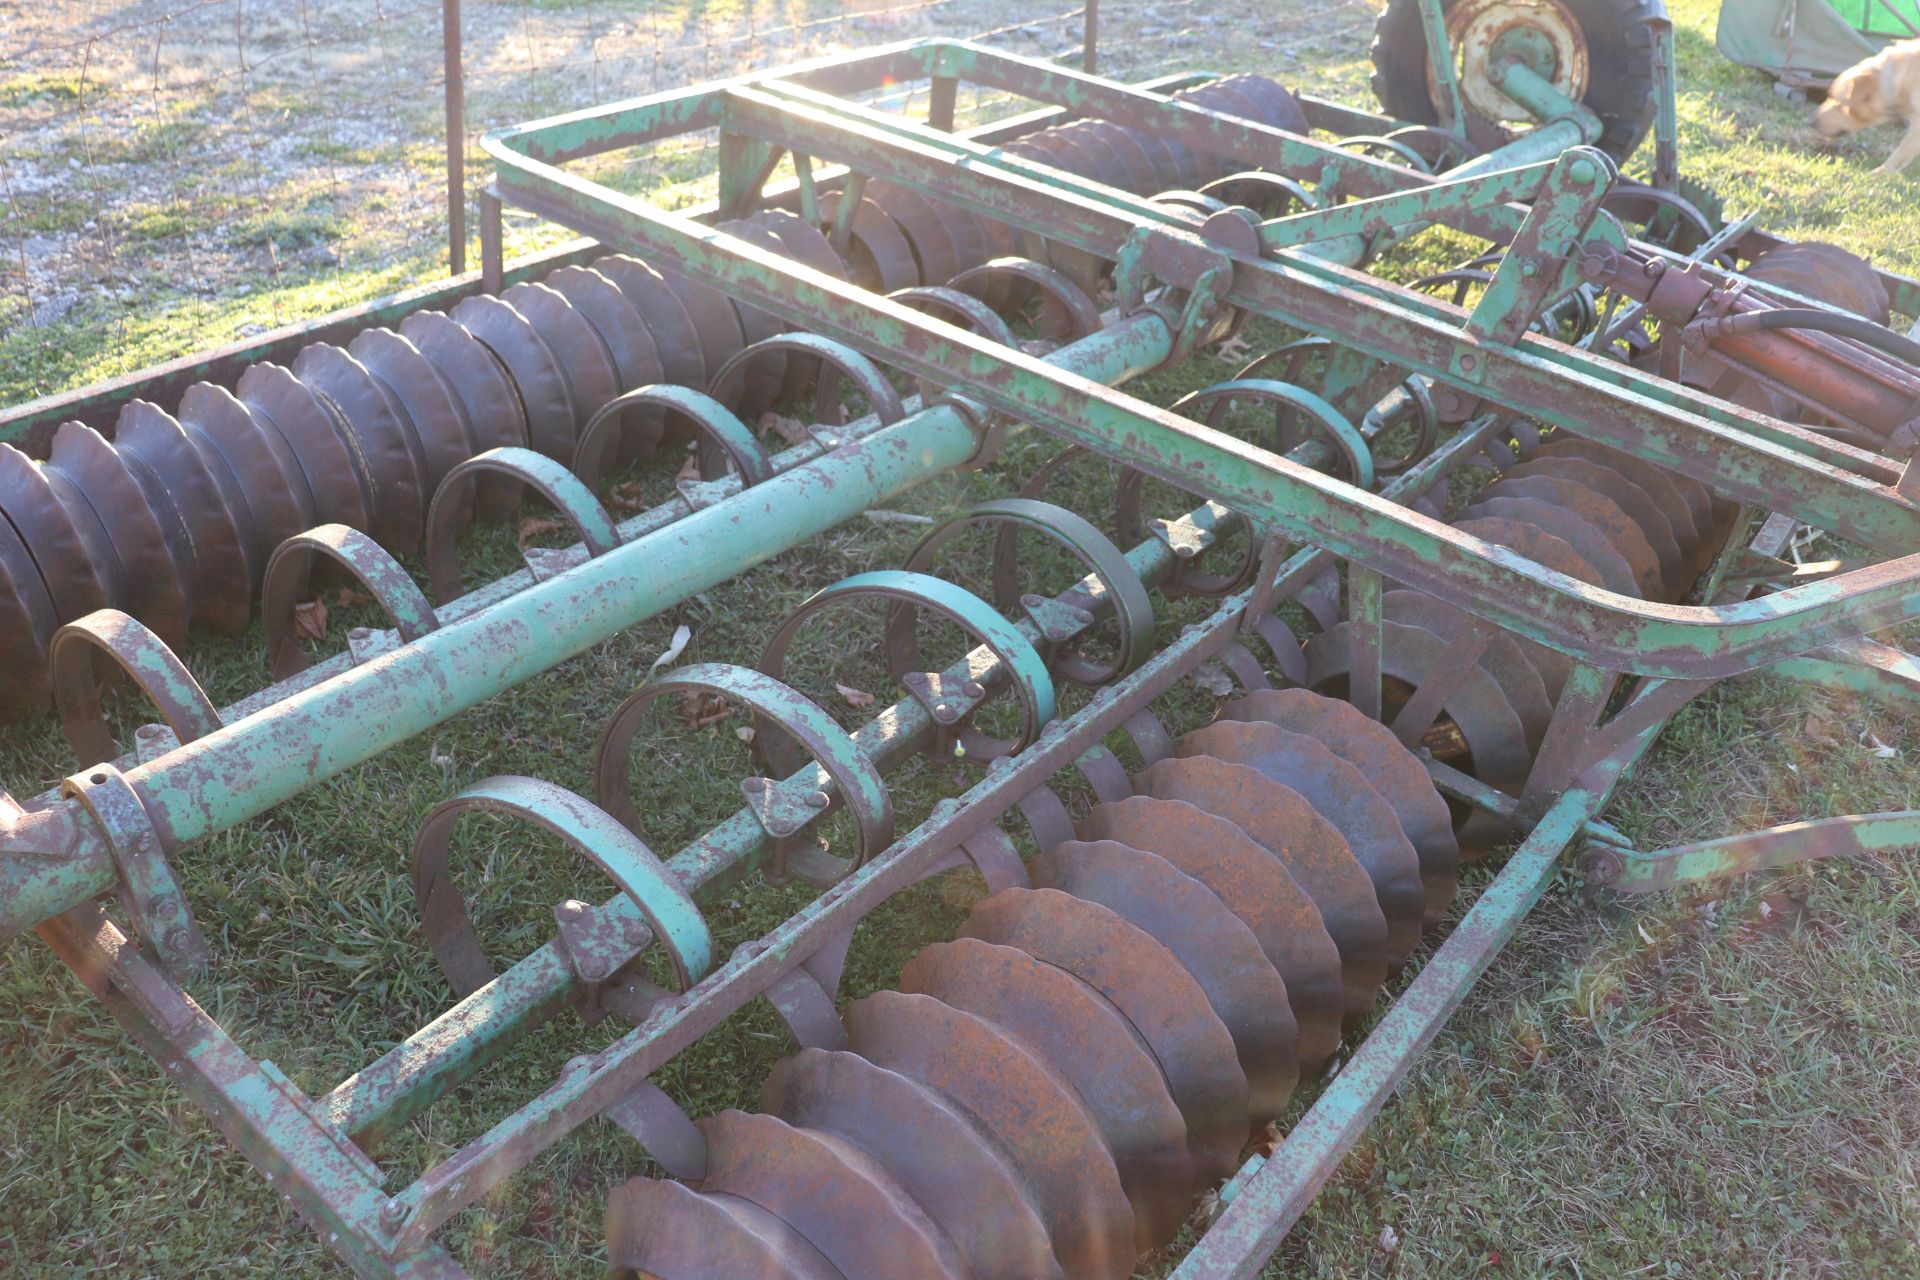 John Deere plow cultivator, 12' wide - Image 2 of 3